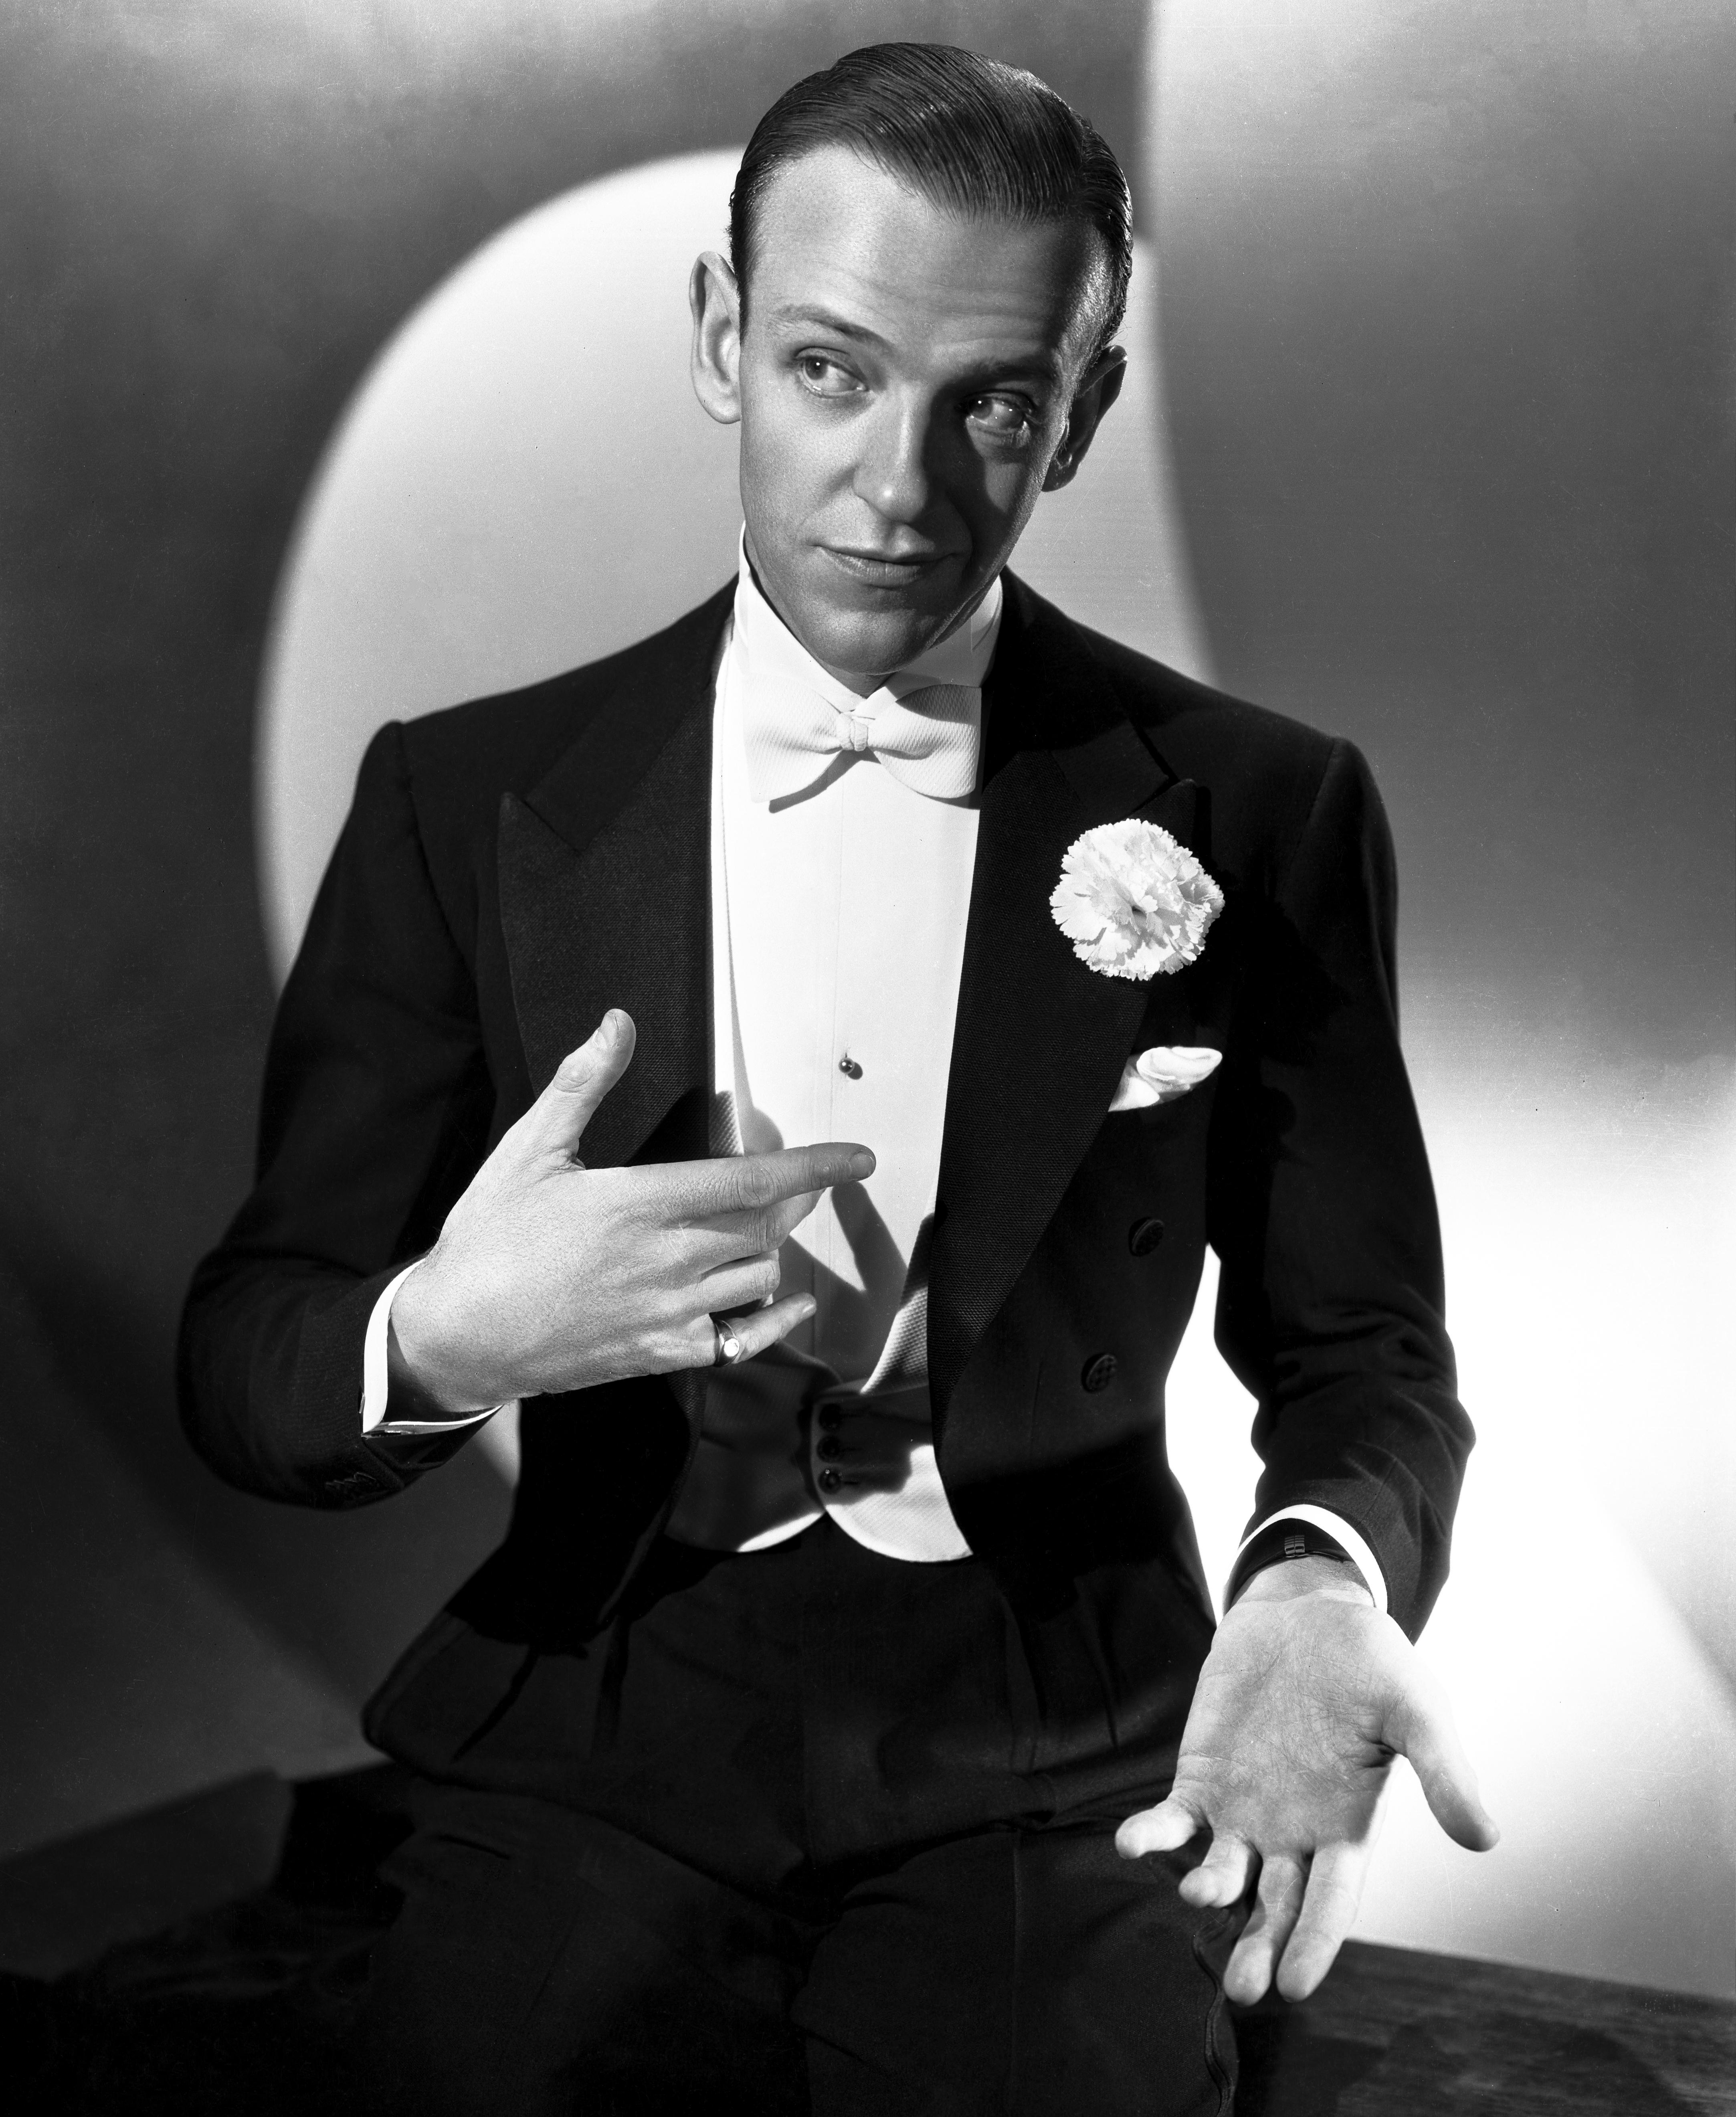 Ernest Bachrach Portrait Photograph – Fred Astaire in Formal Attire Fine Art Print